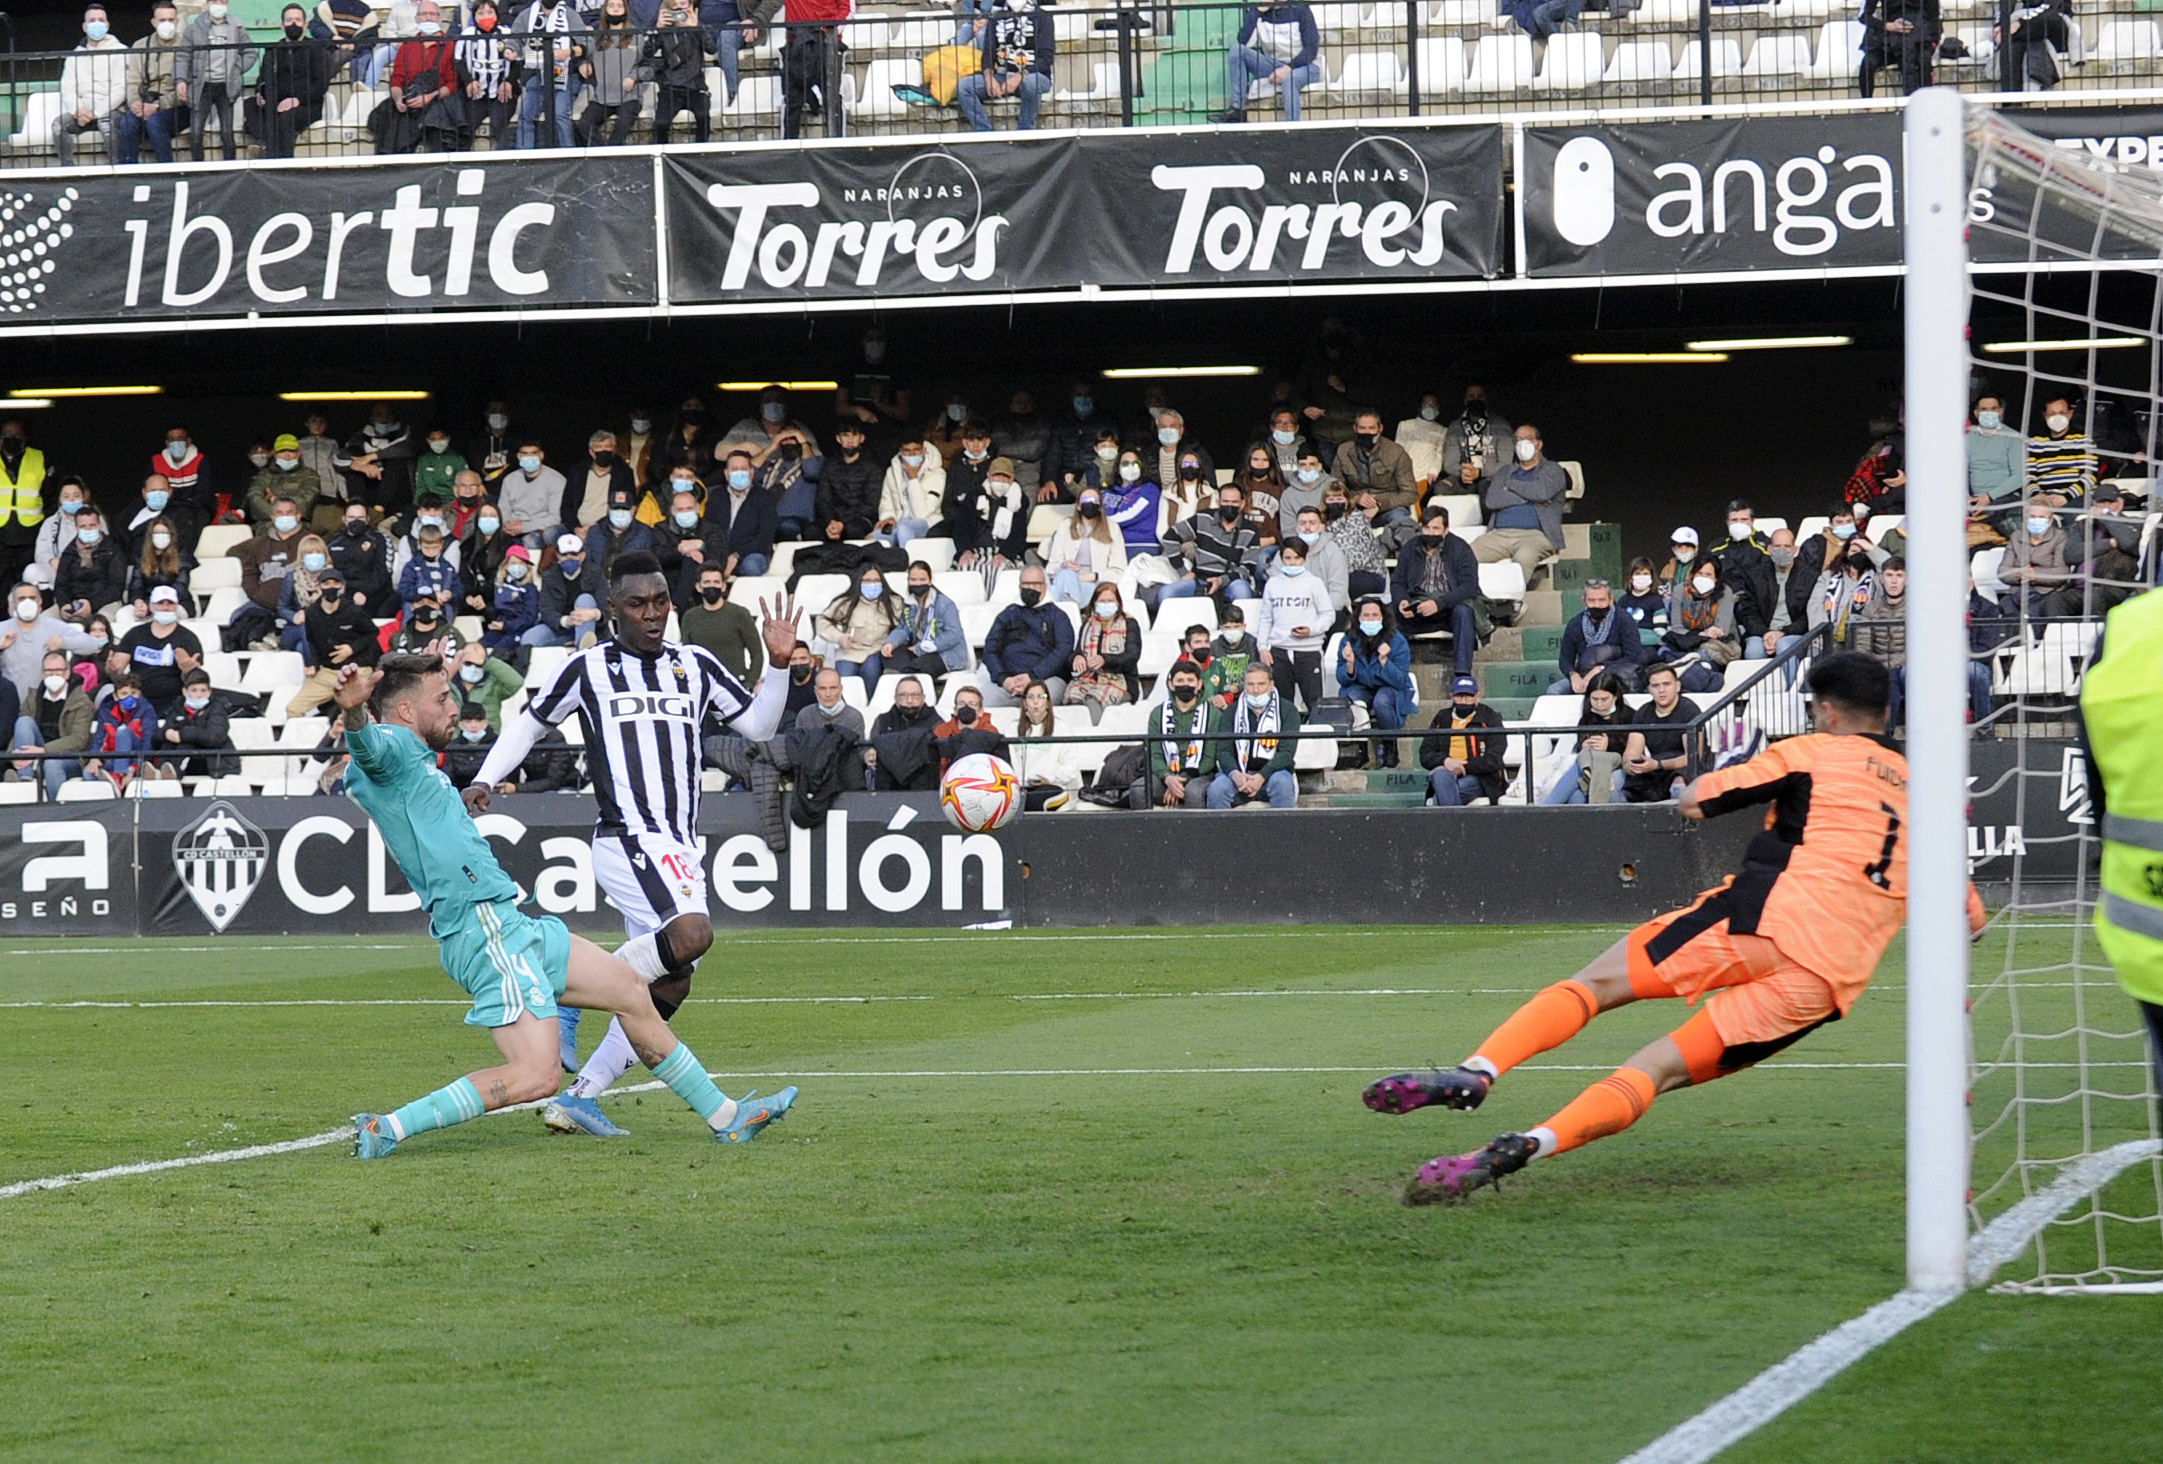 El jugador albinegro, Kon, marc el tercer tanto del Castelln al Real Madrid Castilla.